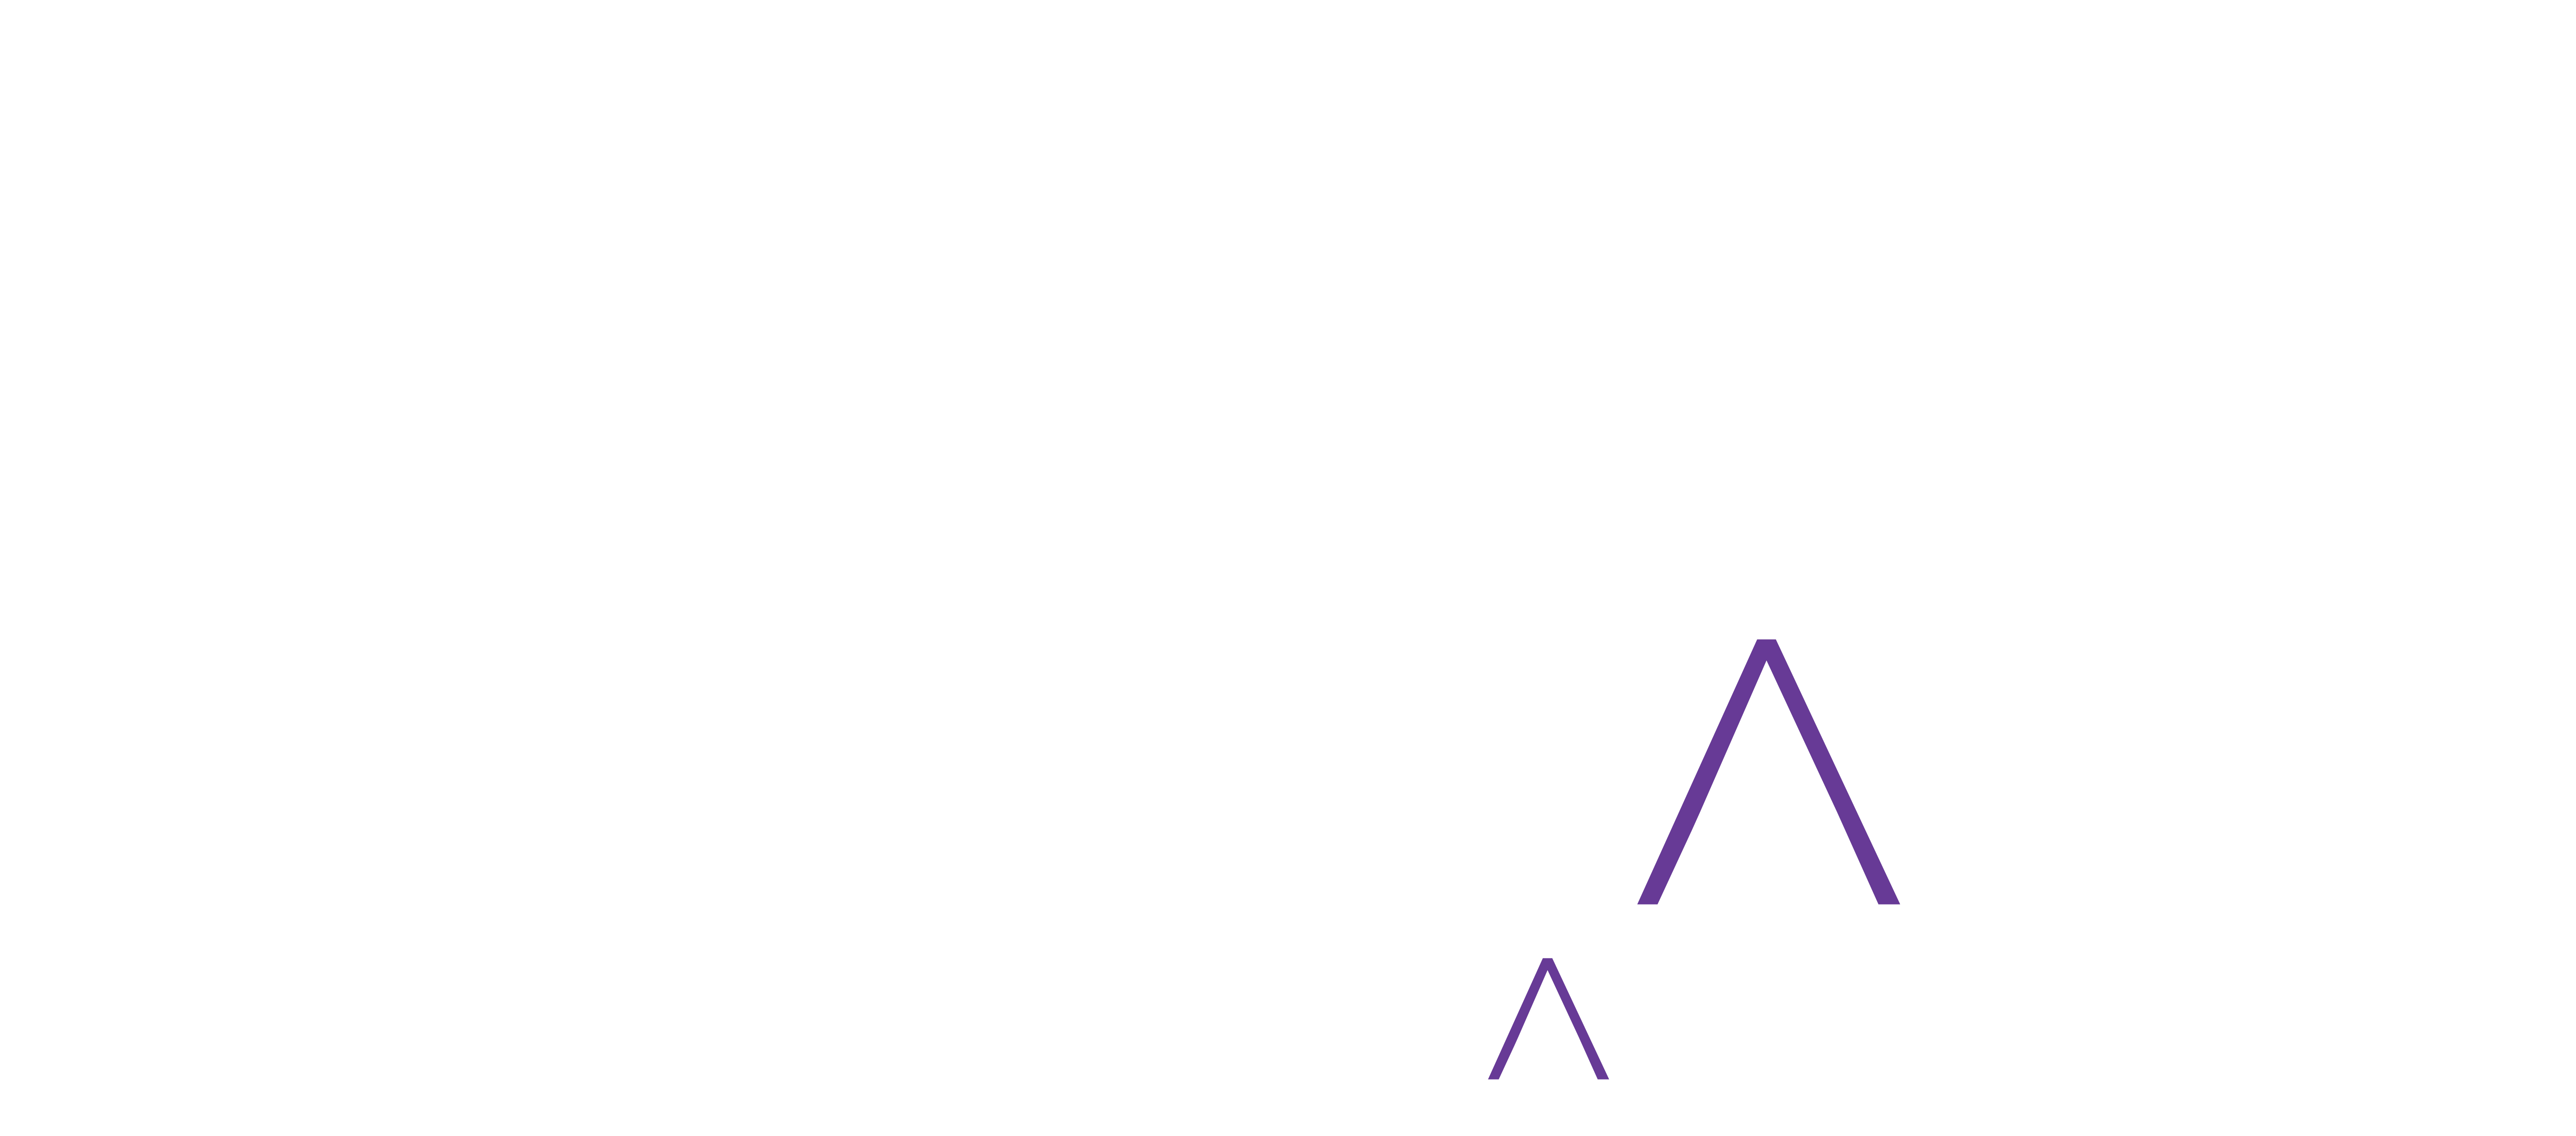 Pinnacle Medical Group